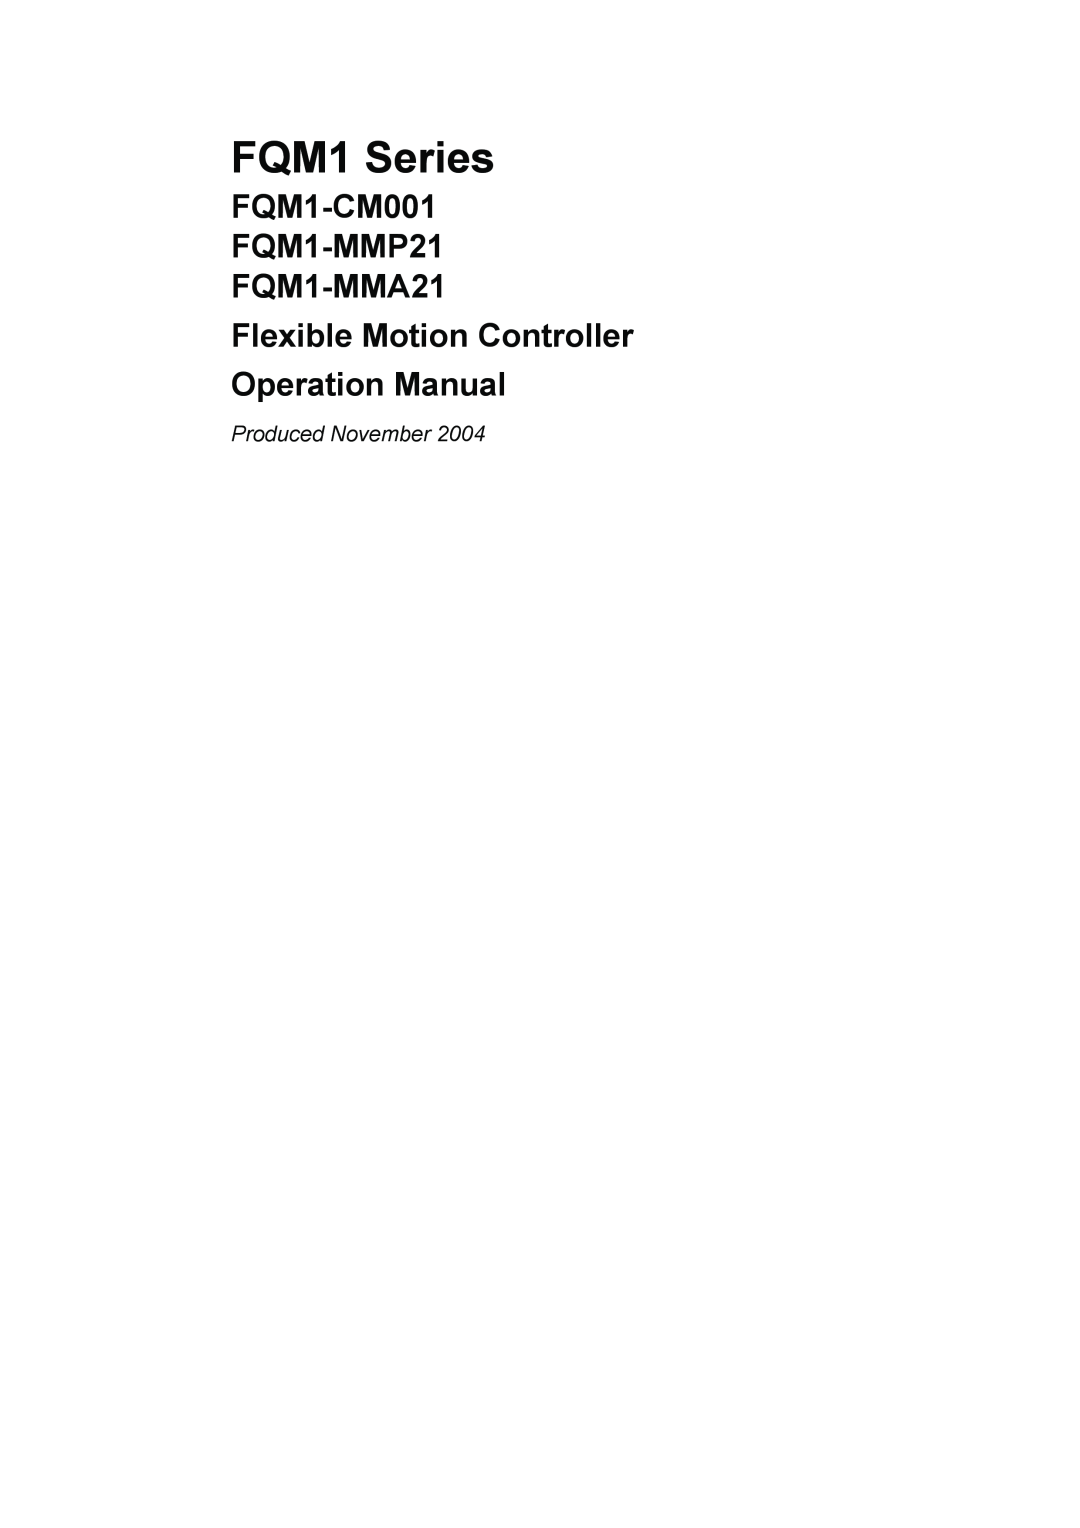 Omron FQM1-CM001 FQM1-MMP21 FQM1-MMA21, Flexible Motion Controller Operation Manual, FQM1 Series, Produced November 